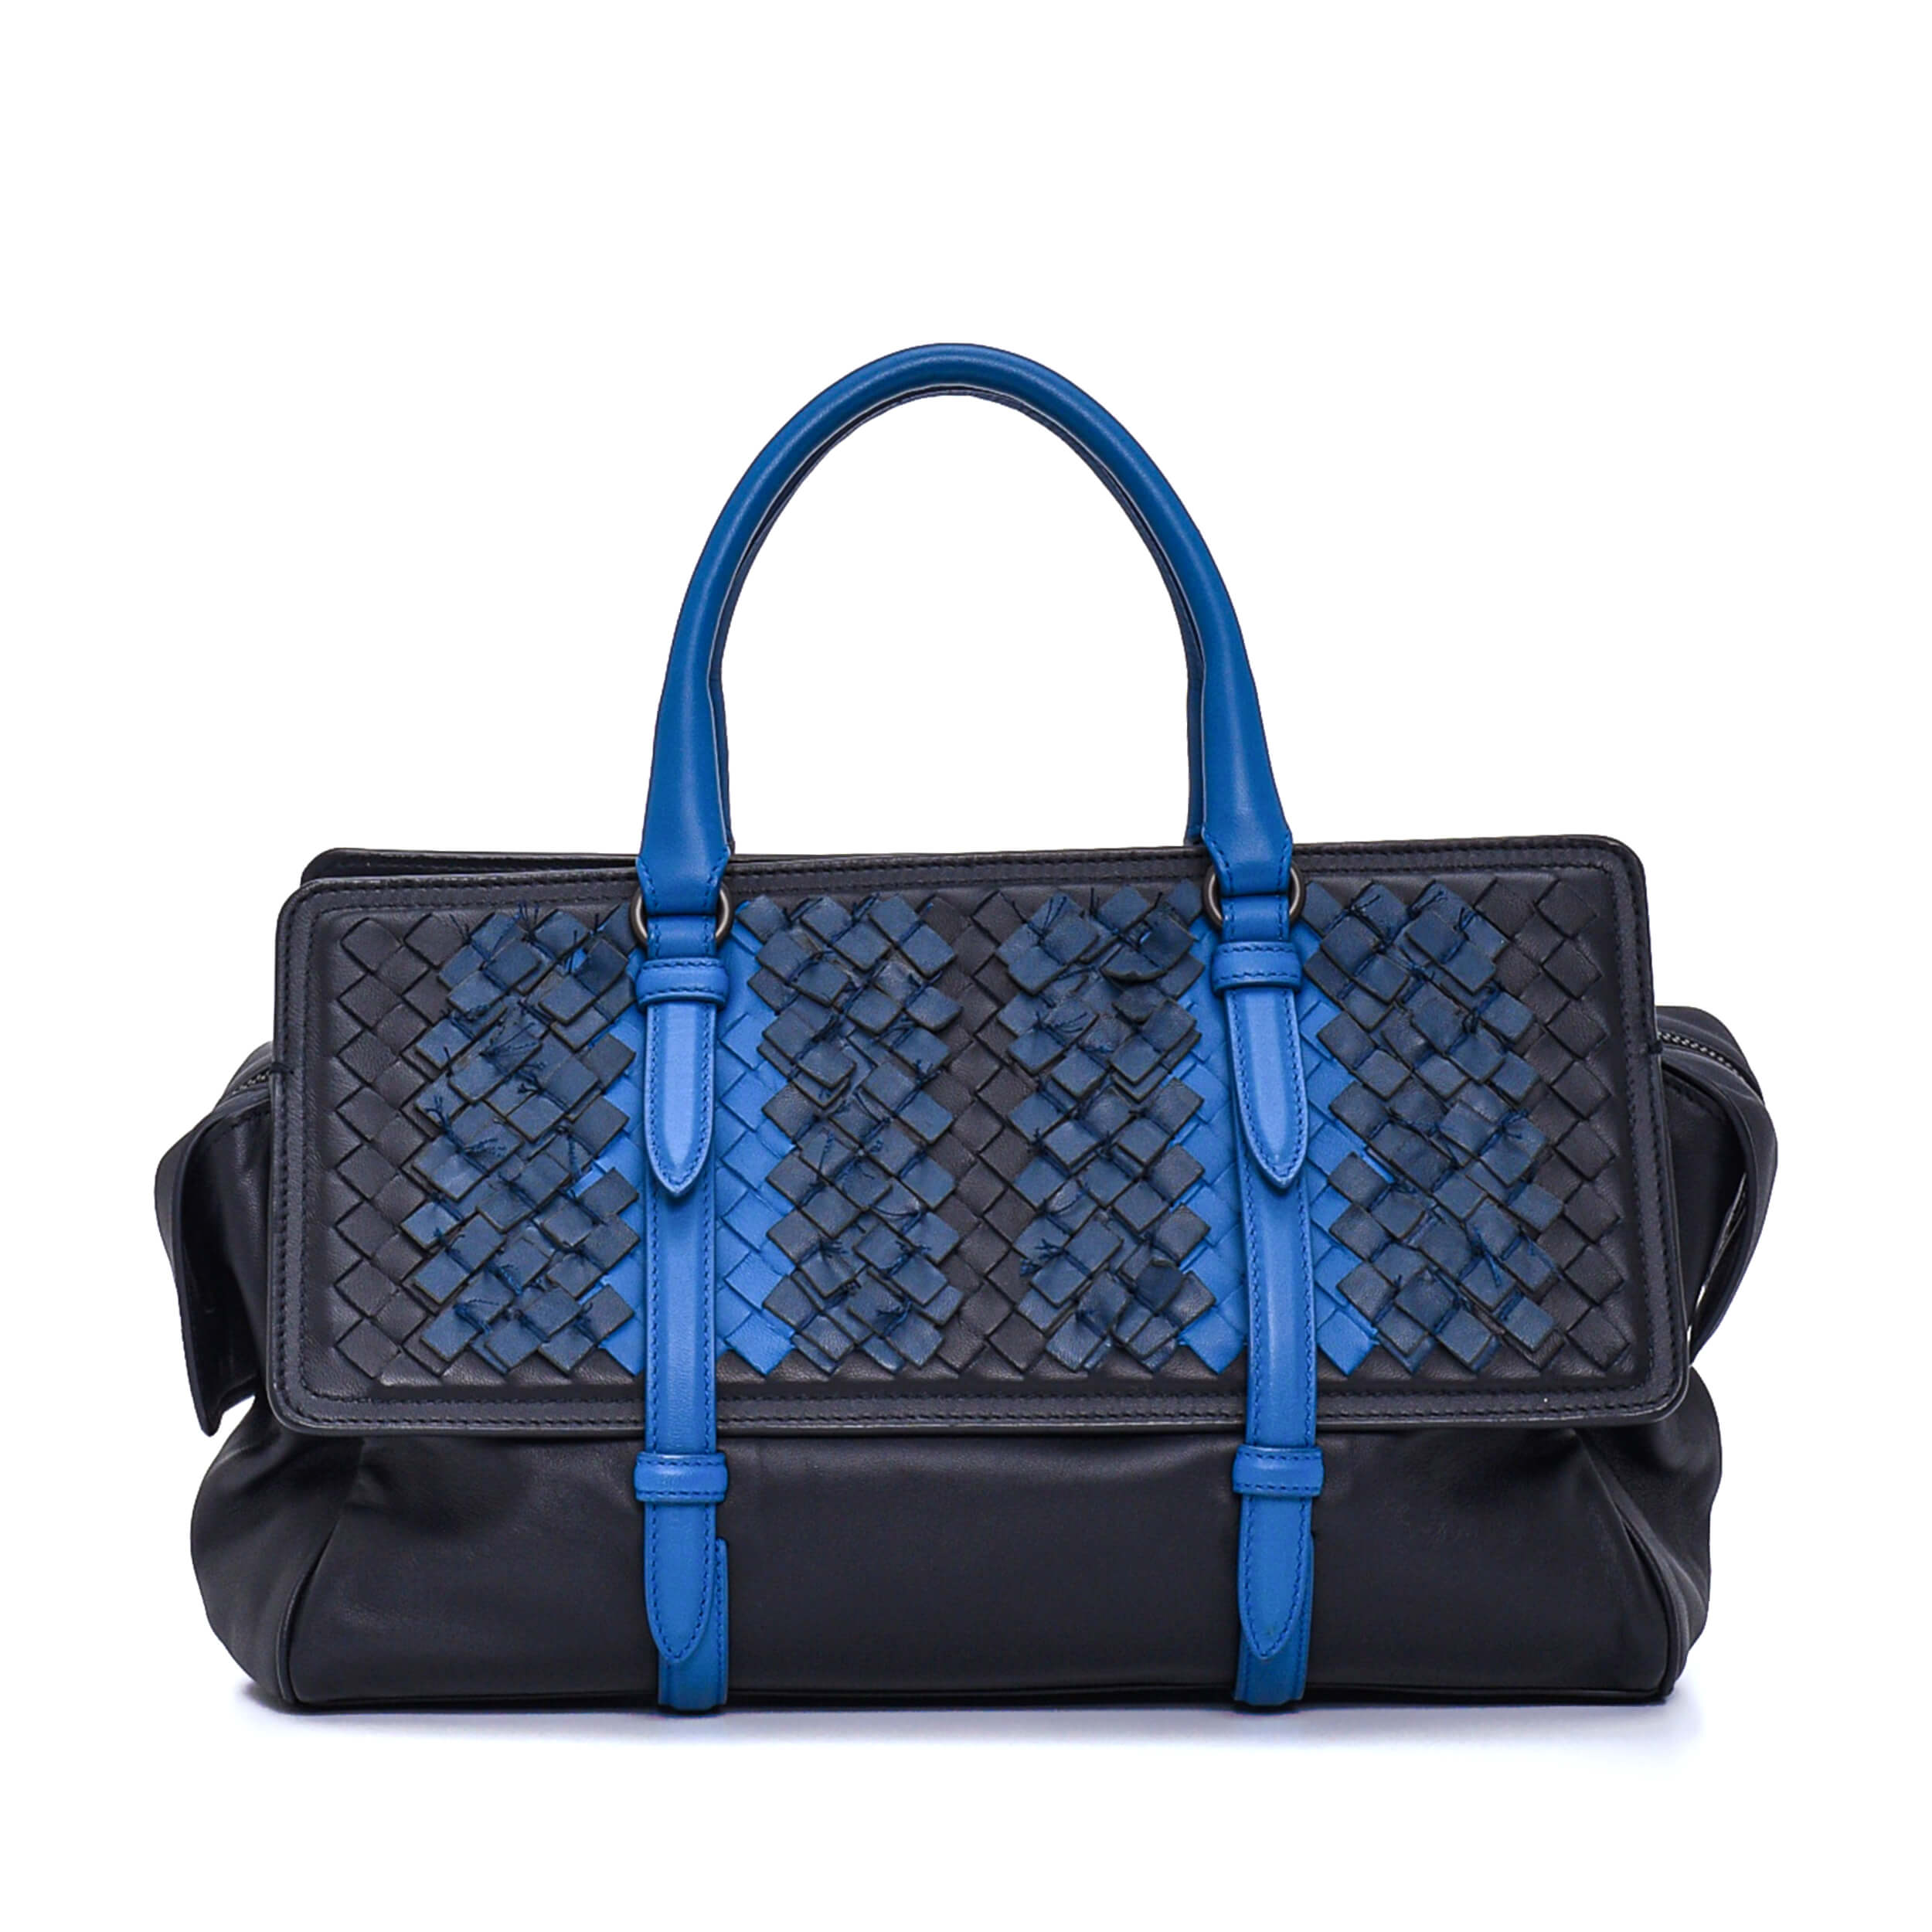 Bottega Veneta - Black & Blue Intercciato Woven Leather Top Handle Bag